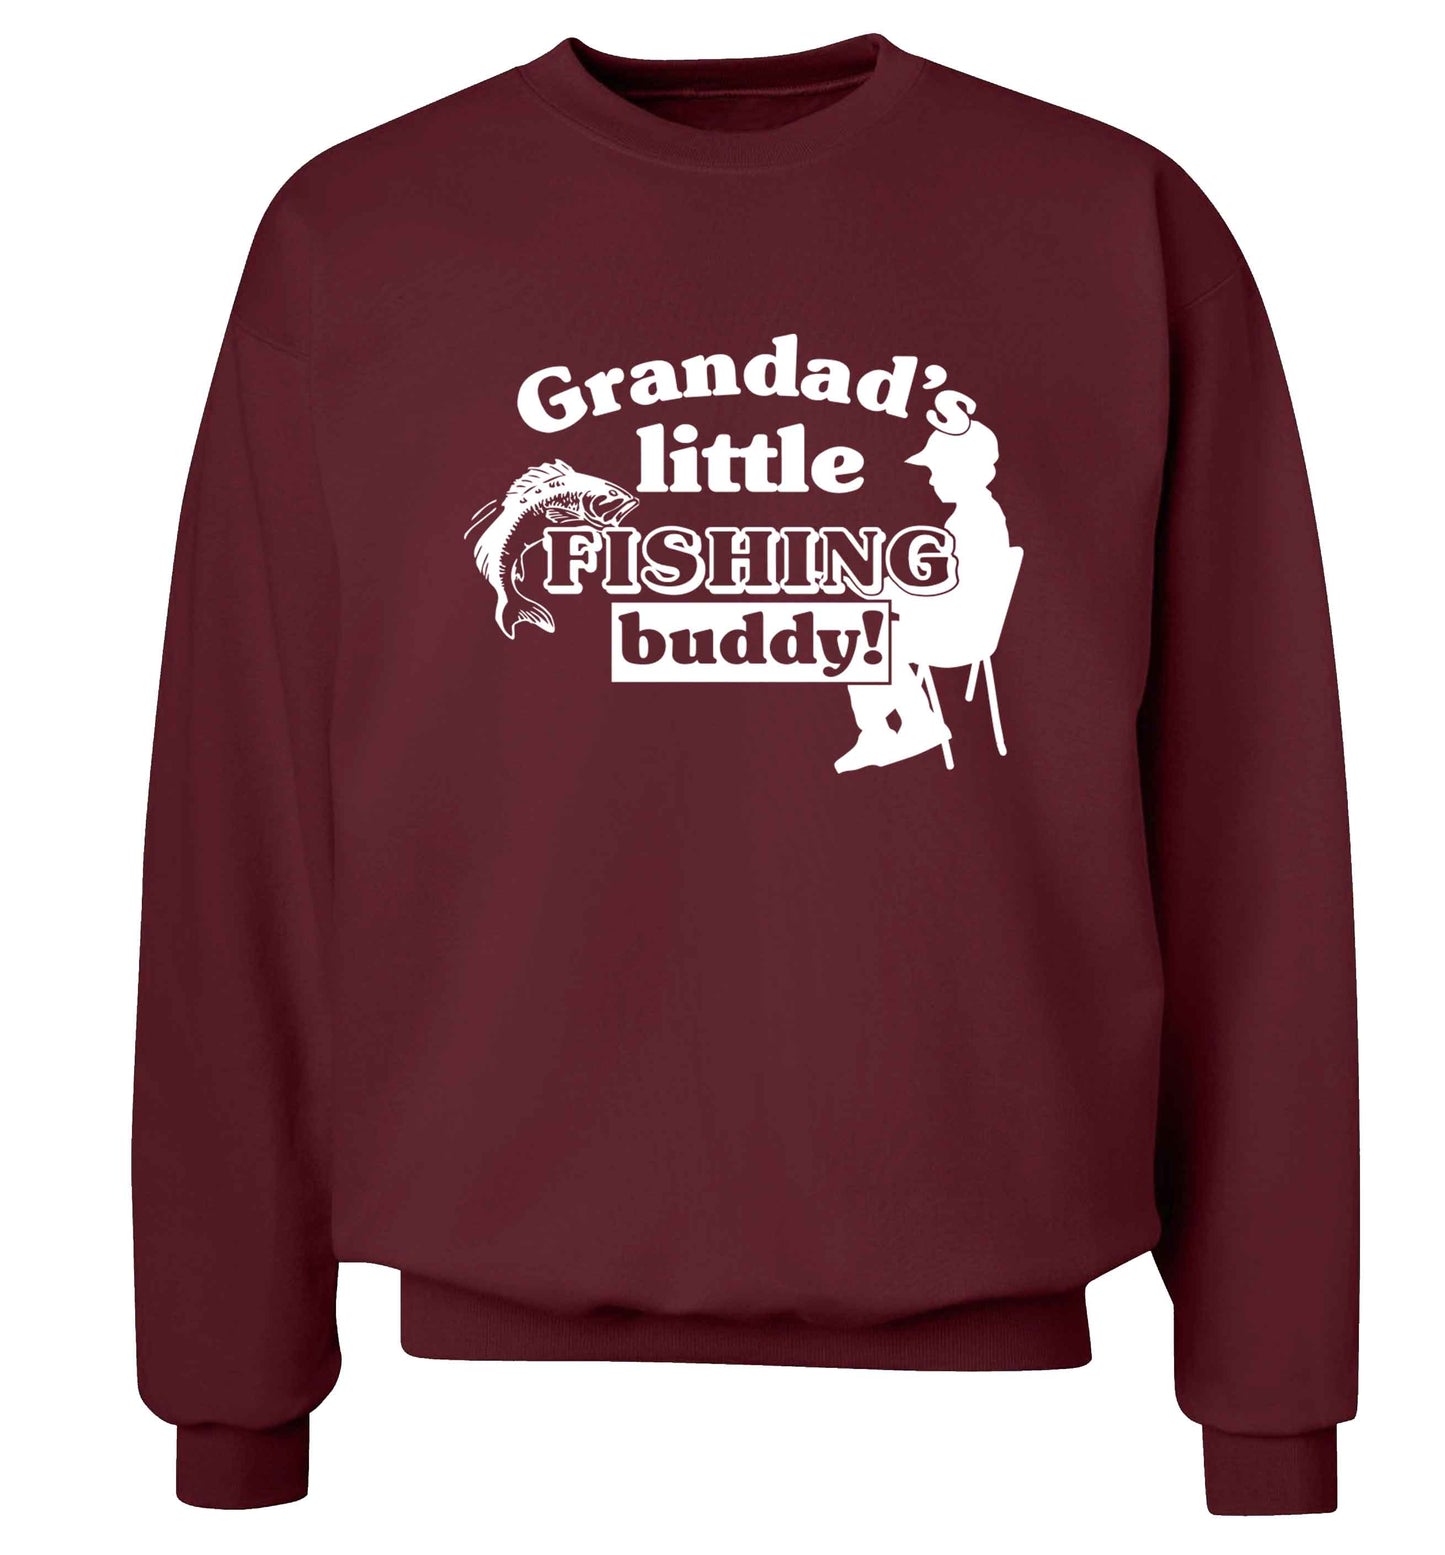 Grandad's little fishing buddy! Adult's unisex maroon Sweater 2XL